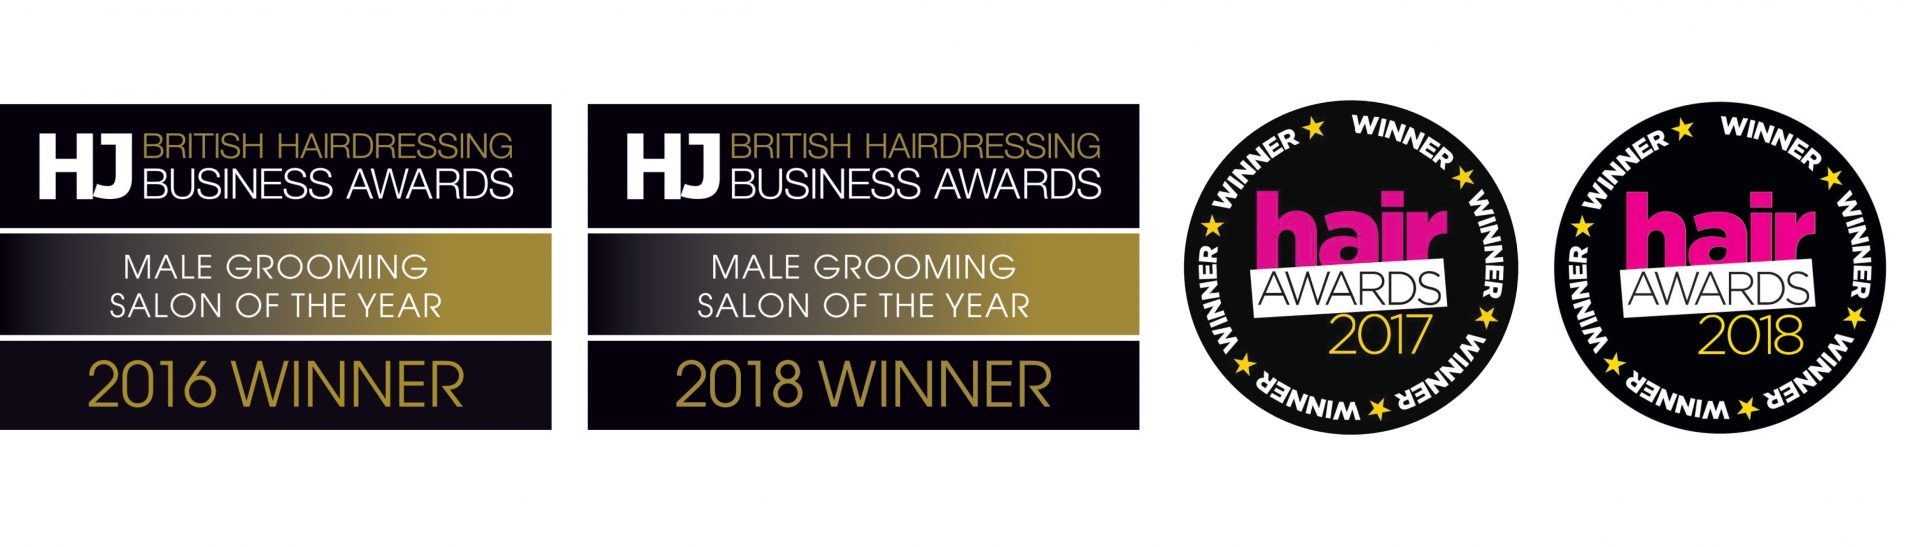 Christian Wiles Awards 2018, Award Winning Men's Hair Salon in Northampton